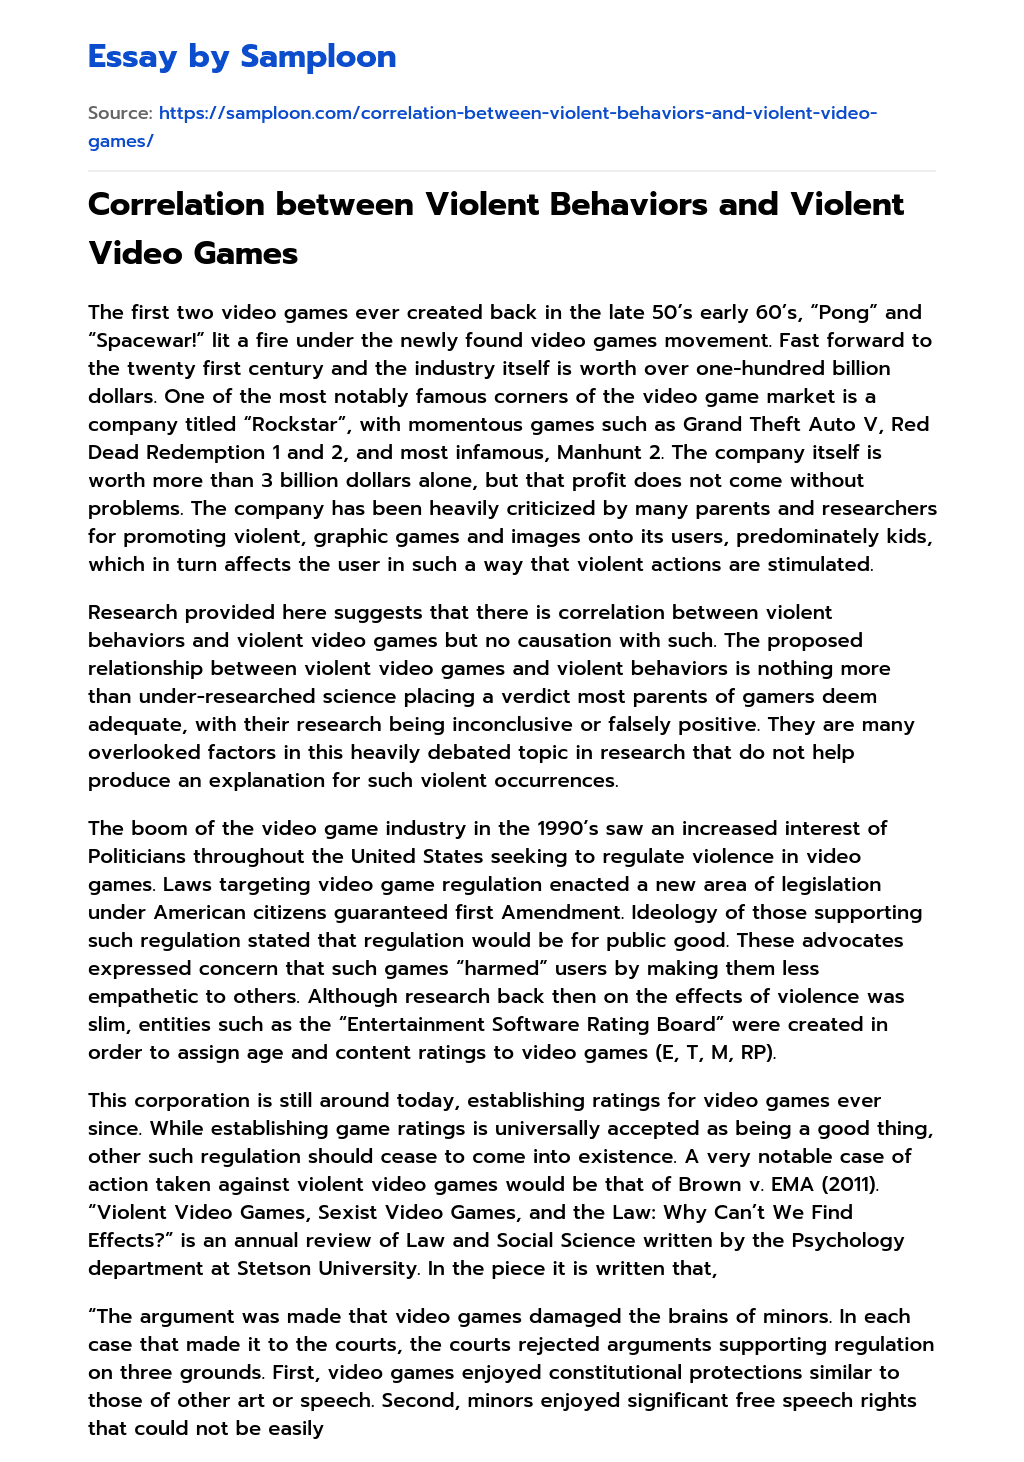 Correlation between Violent Behaviors and Violent Video Games essay